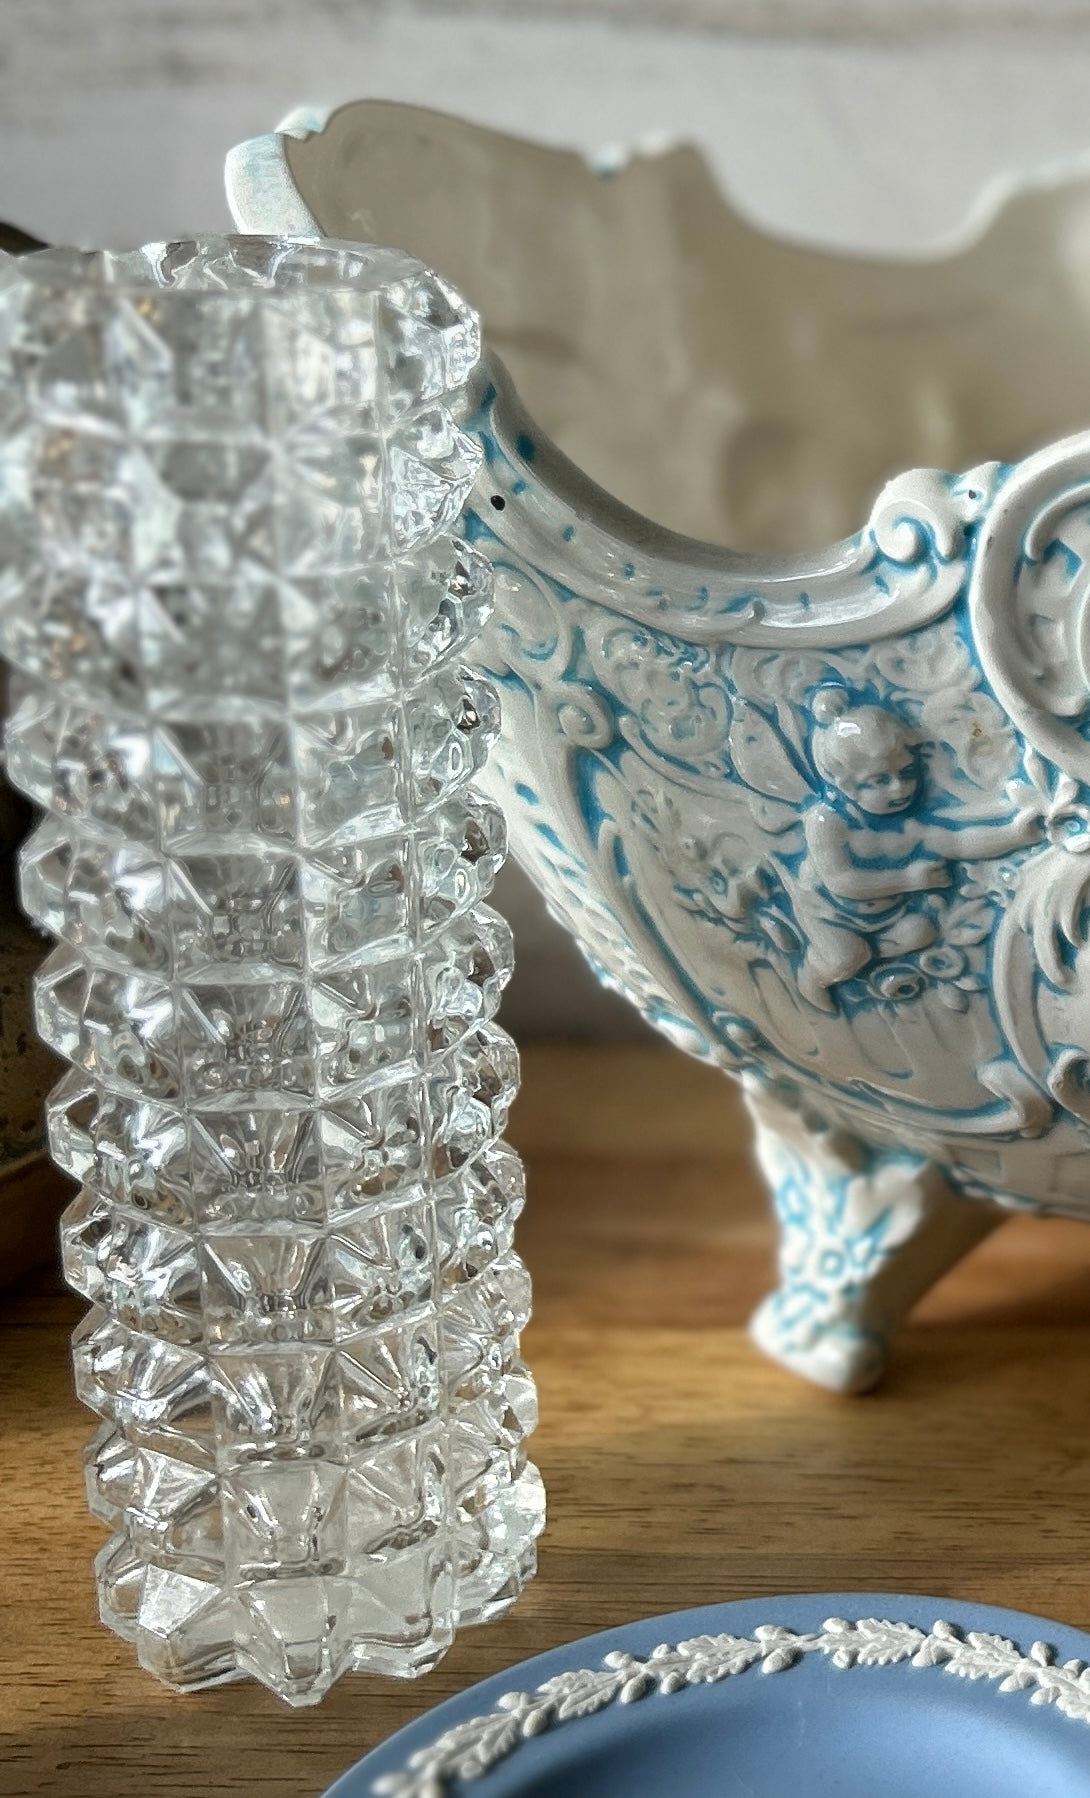 Textured Glass Cylinder Vase